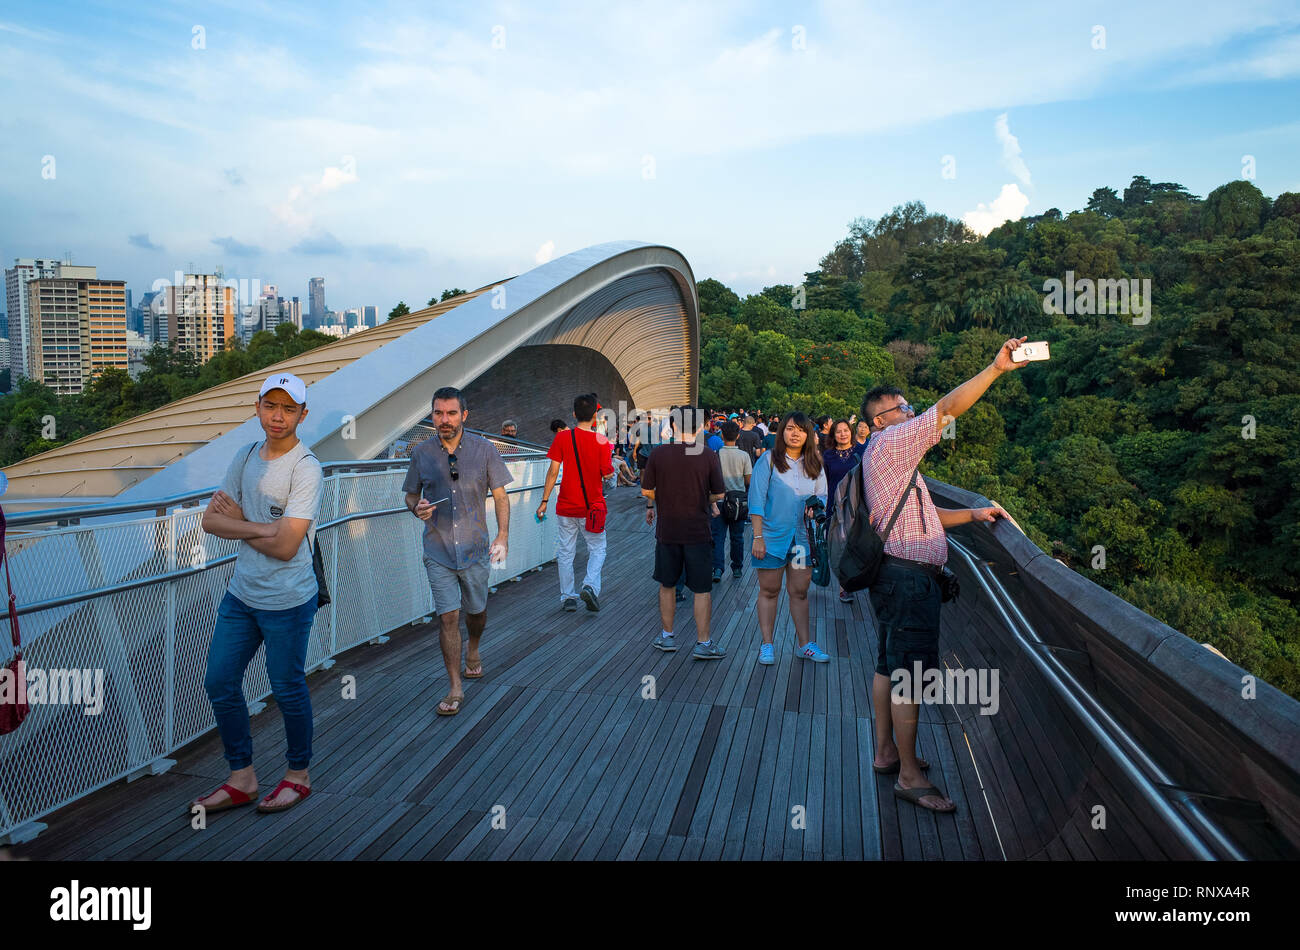 Tourists on Henderson Waves Bridge in Mount Faber Park, Singapore Stock Photo